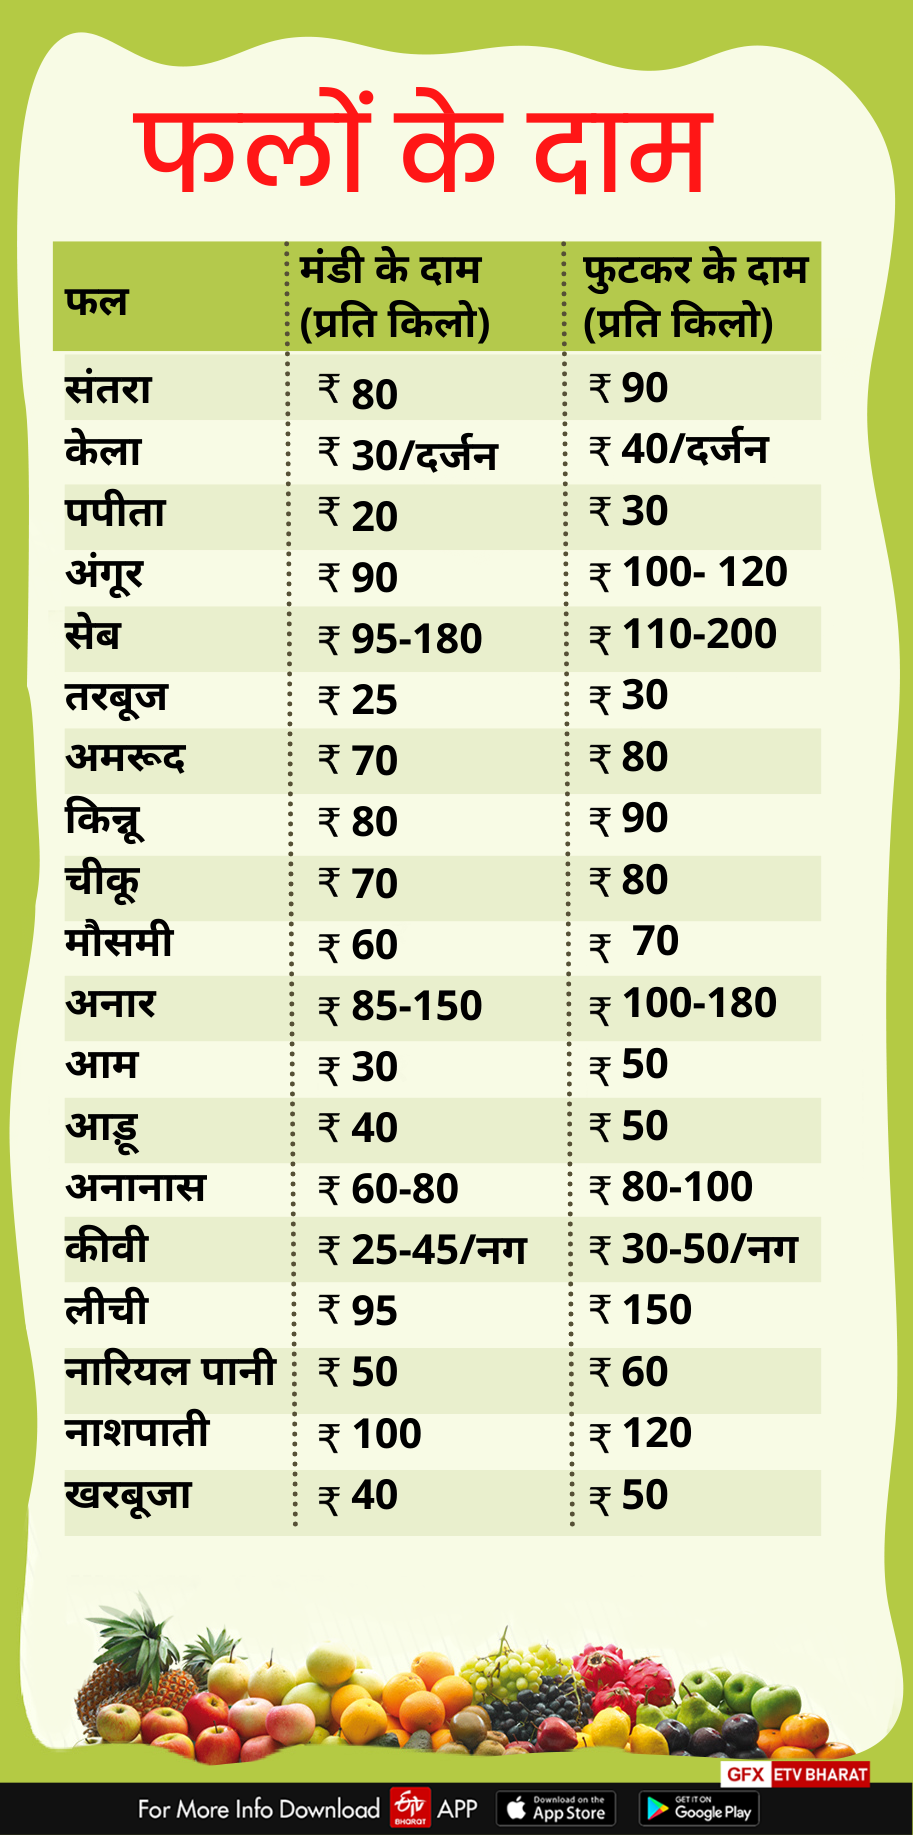 Dehradun vegetables price